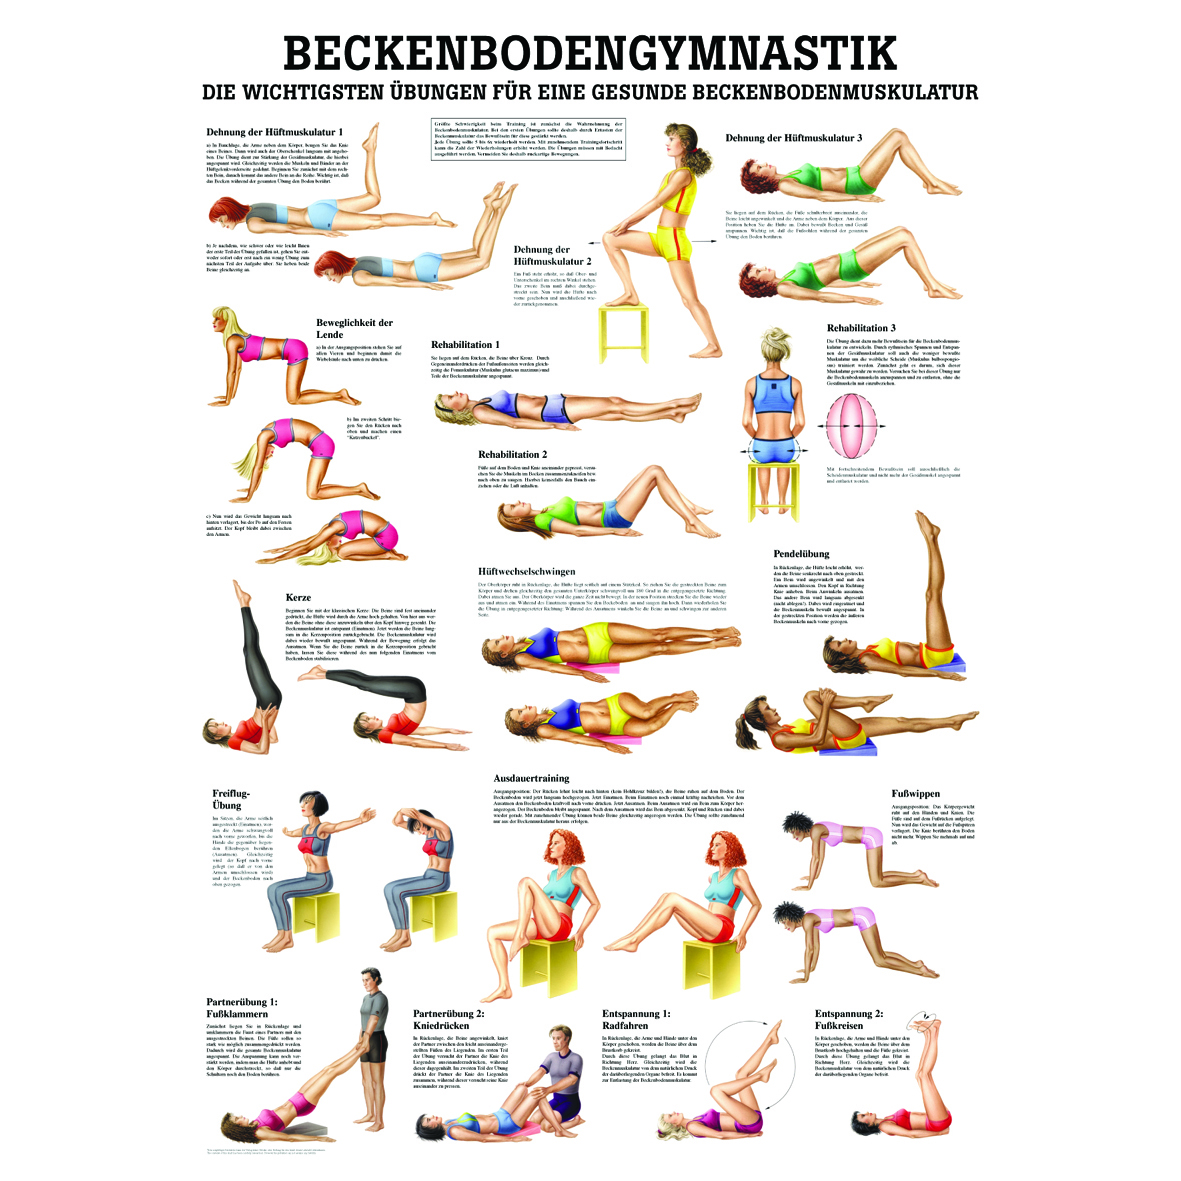 Anatomie-Poster "Beckenbodengymnastik"